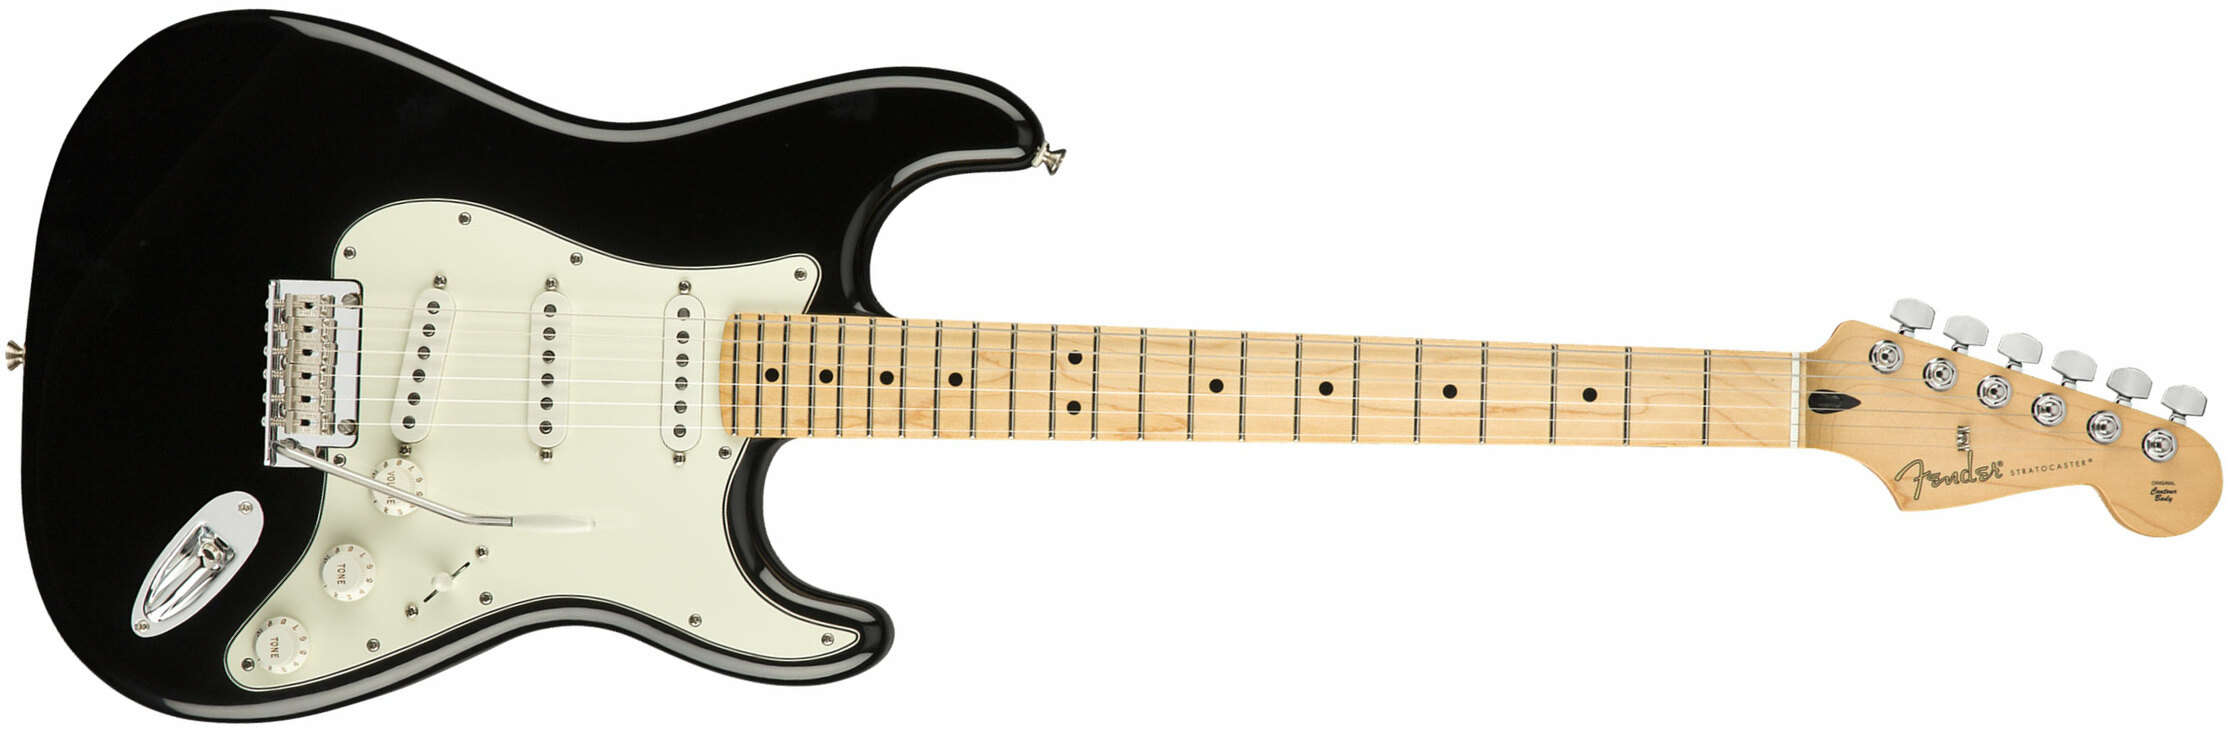 Fender Strat Player Mex Sss Mn - Black - Guitarra eléctrica con forma de str. - Main picture